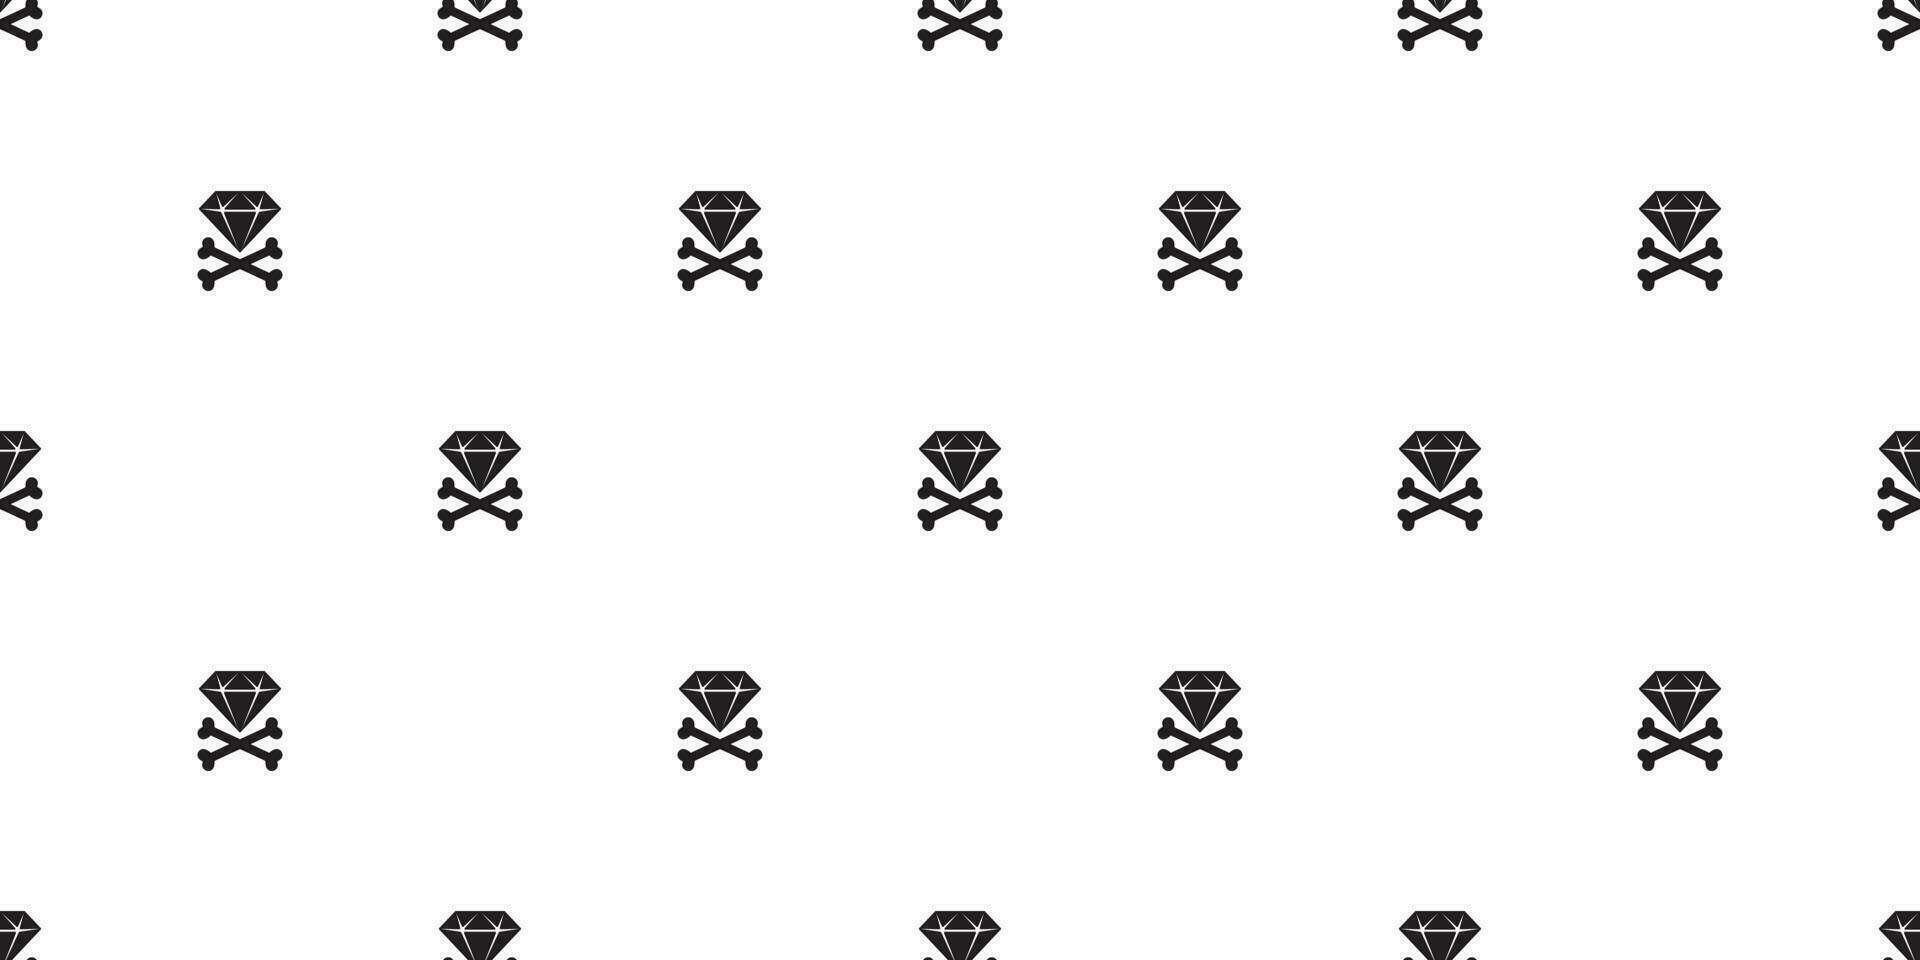 pirate cross bone seamless pattern diamond vector Halloween skull scarf isolated tile background repeat wallpaper